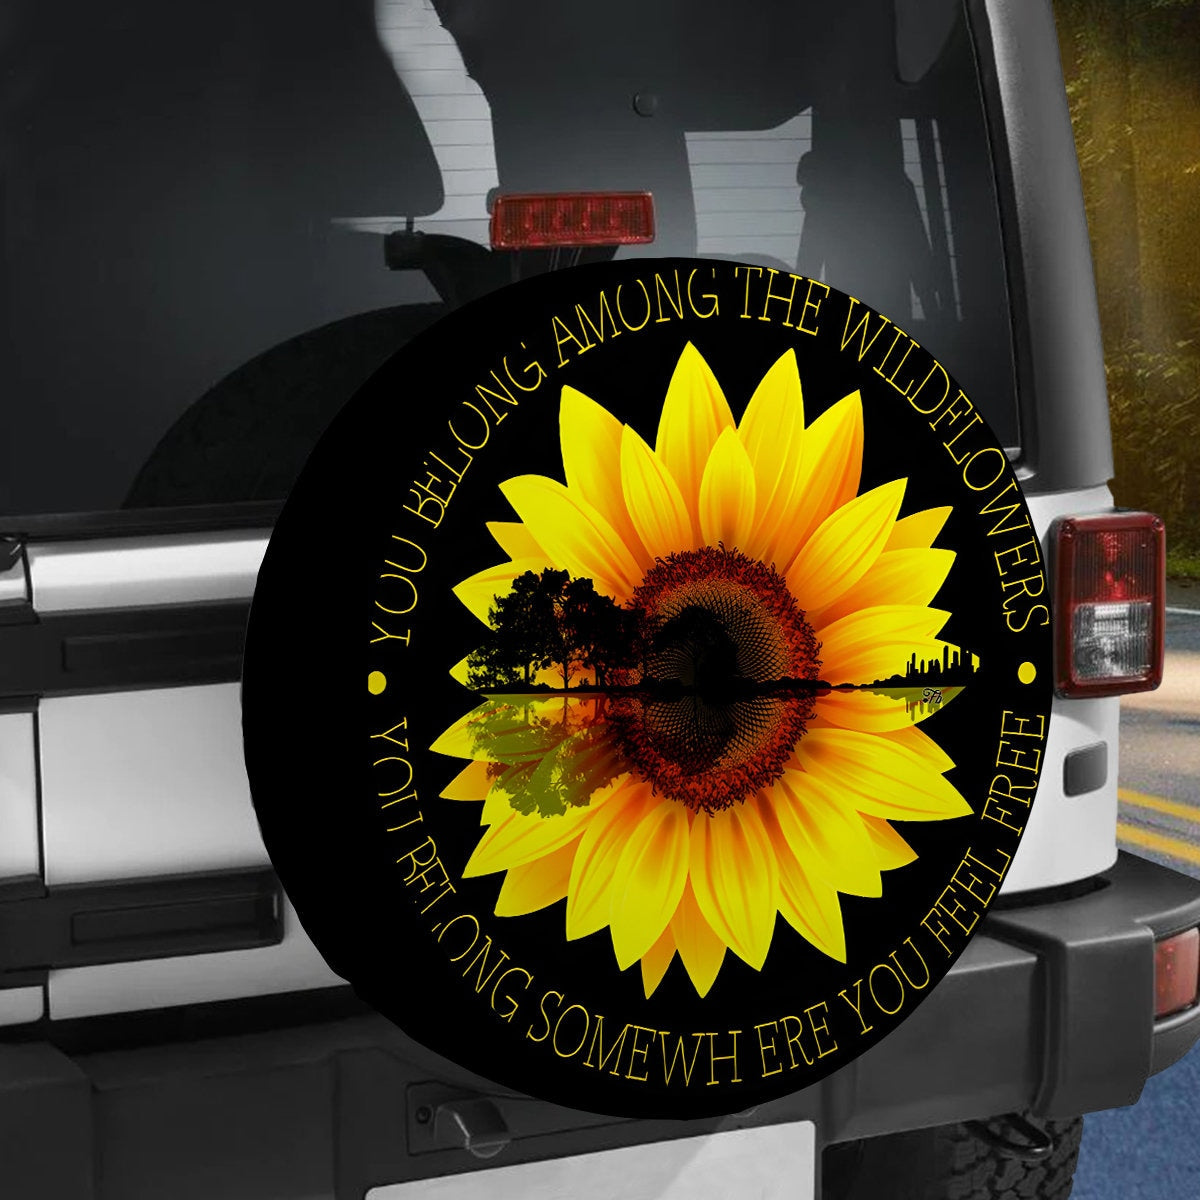 Sunflower Artwork Tire Cover - Wildflowers Tire Cover - Sunflower Tire Cover